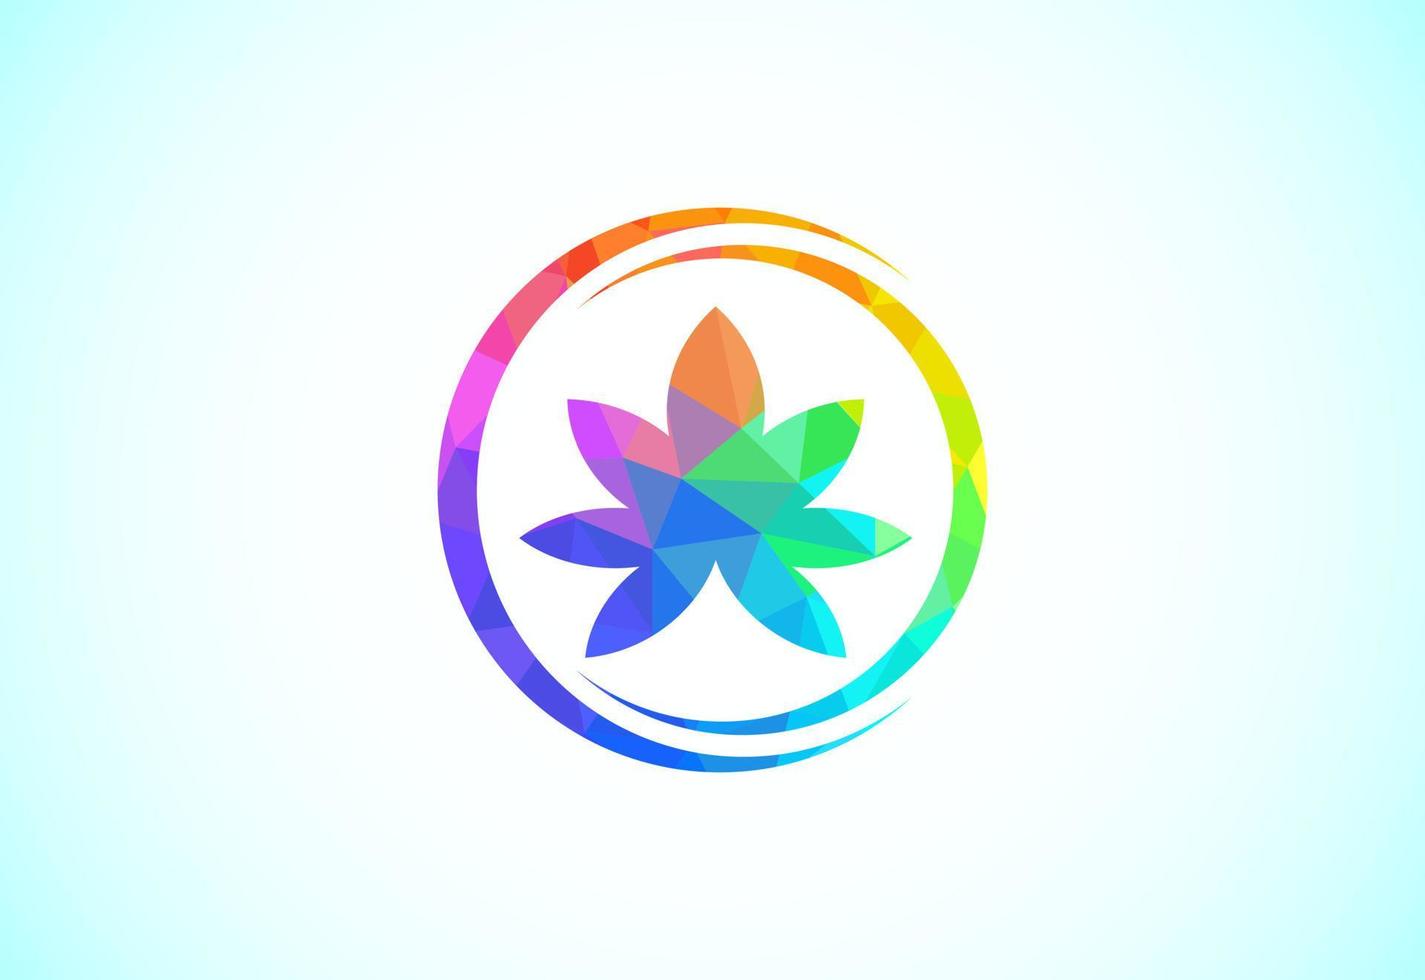 marijuana feuille. médical cannabis. chanvre huile. cannabis ou marijuana feuille faible poly style logo vecteur